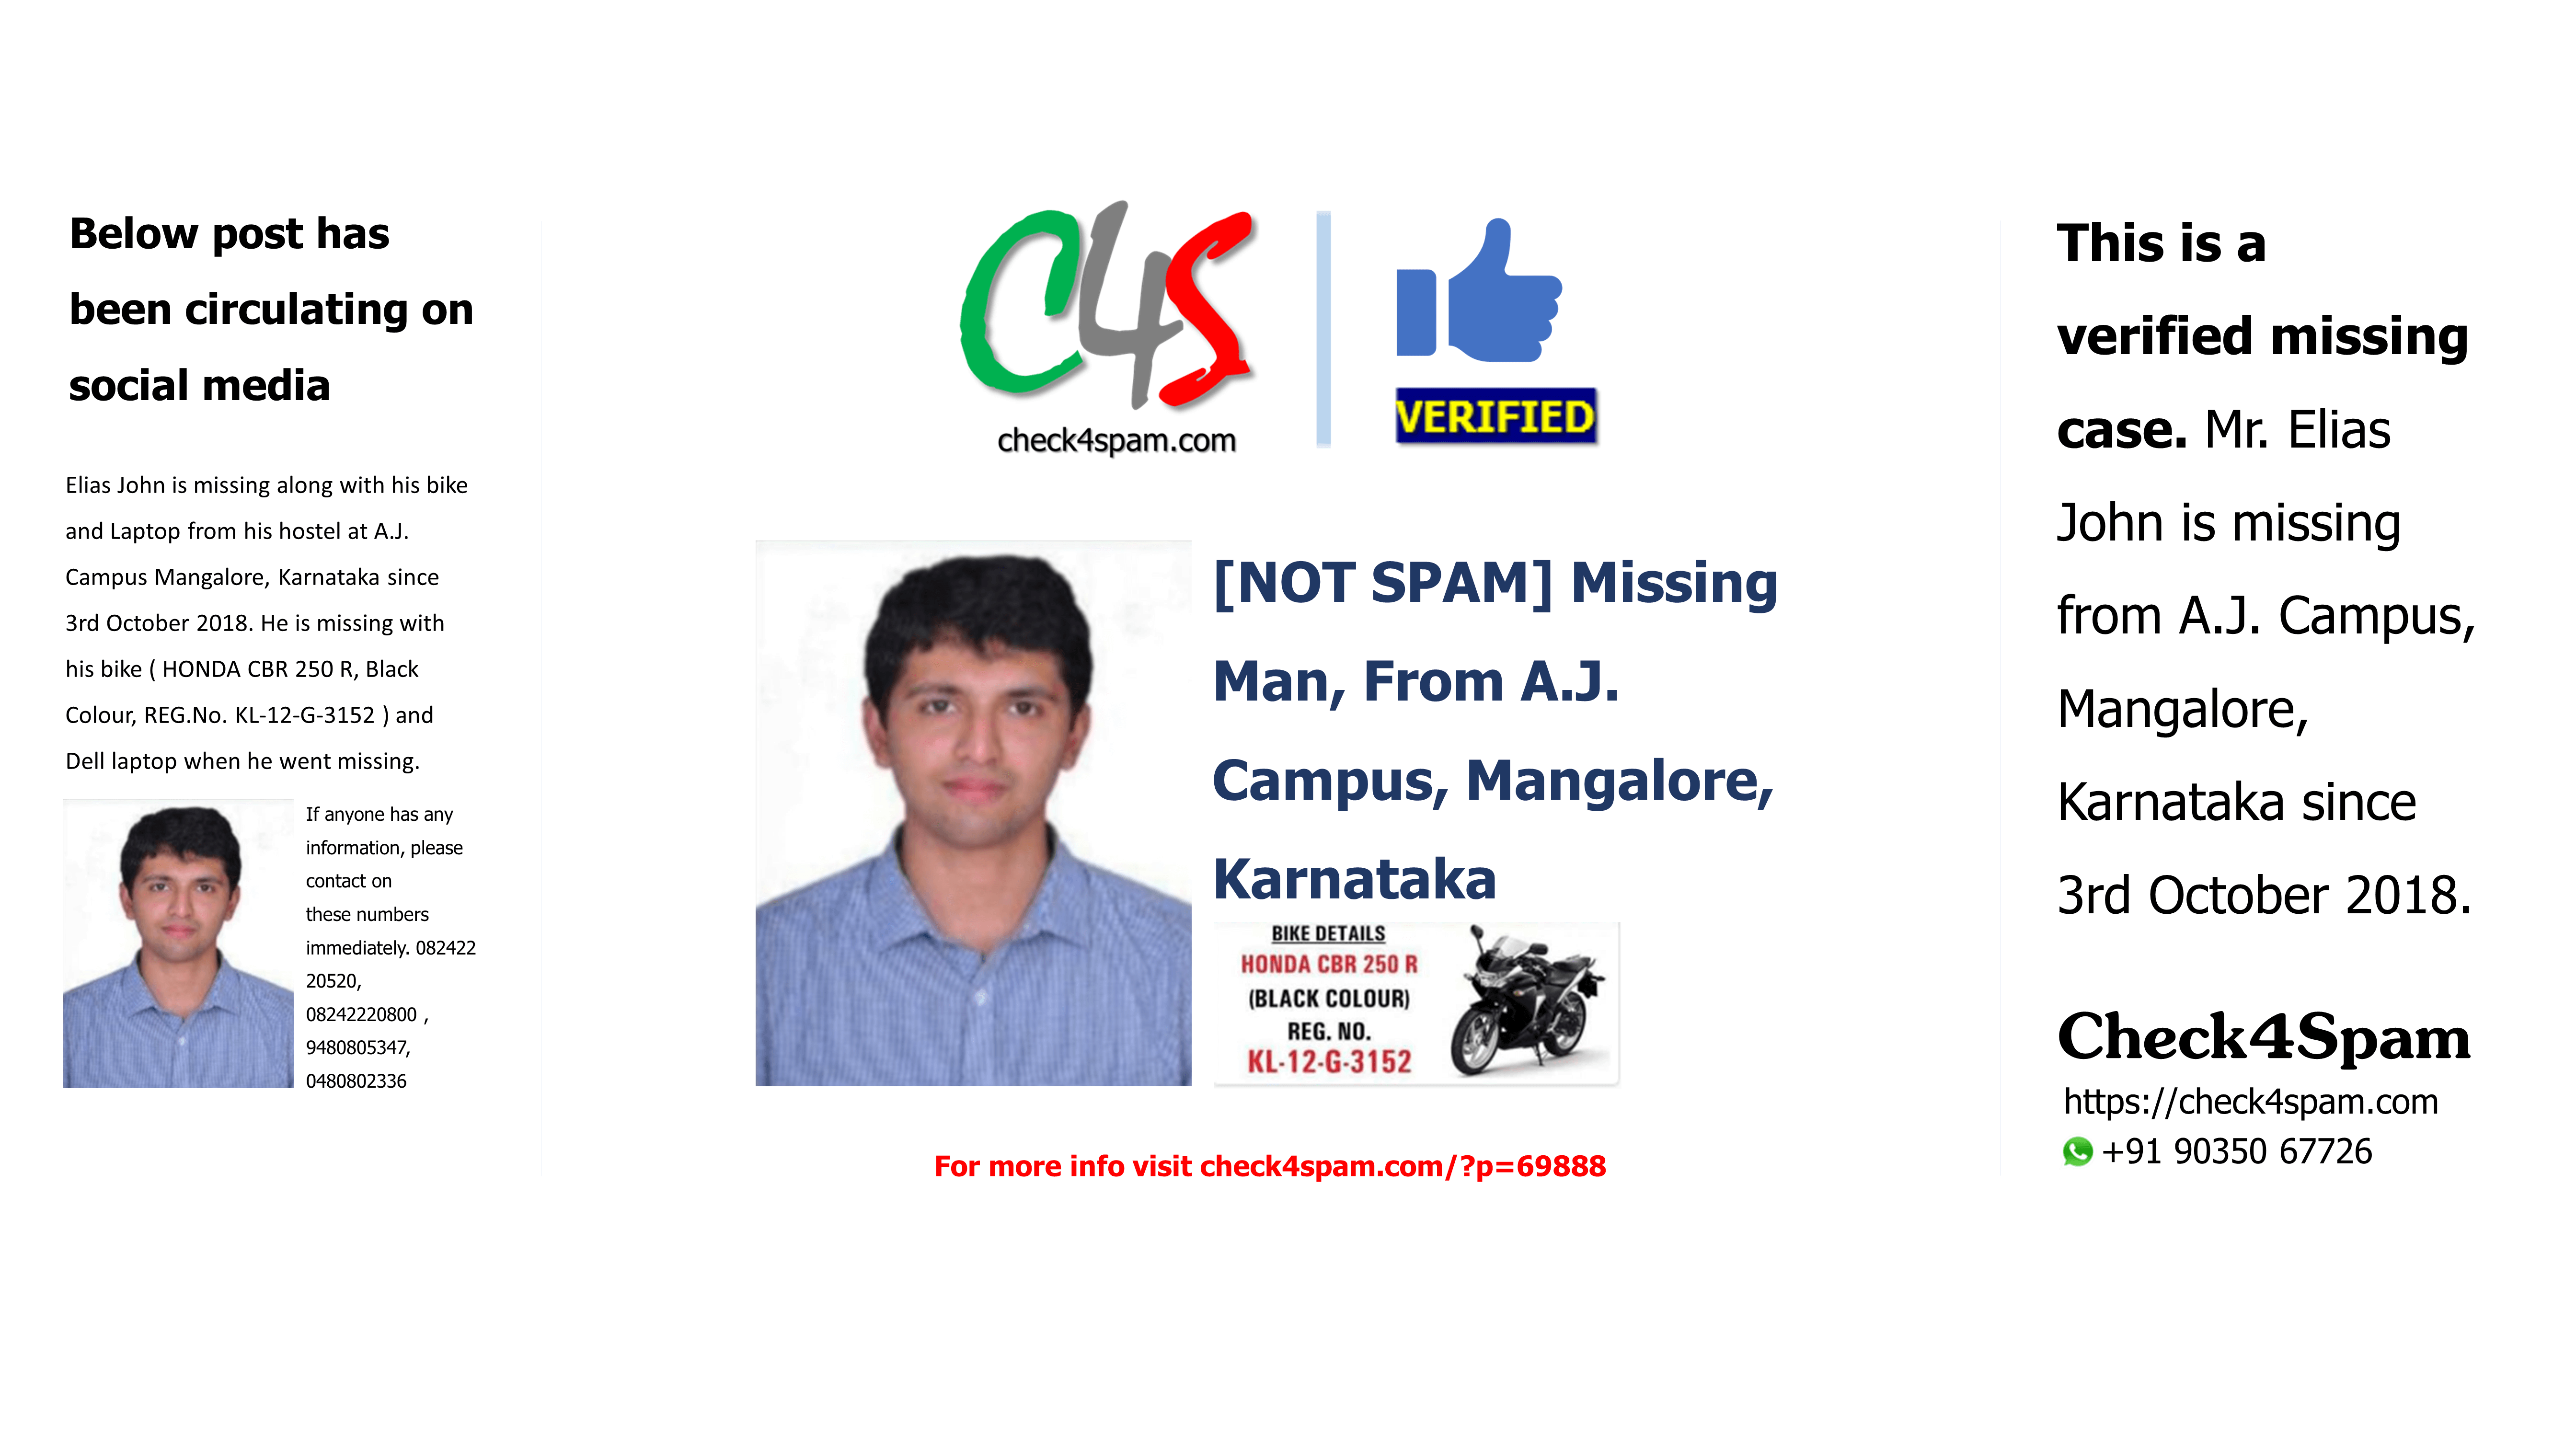 [NOT SPAM] Missing Man, From A.J. Campus, Mangalore, Karnataka